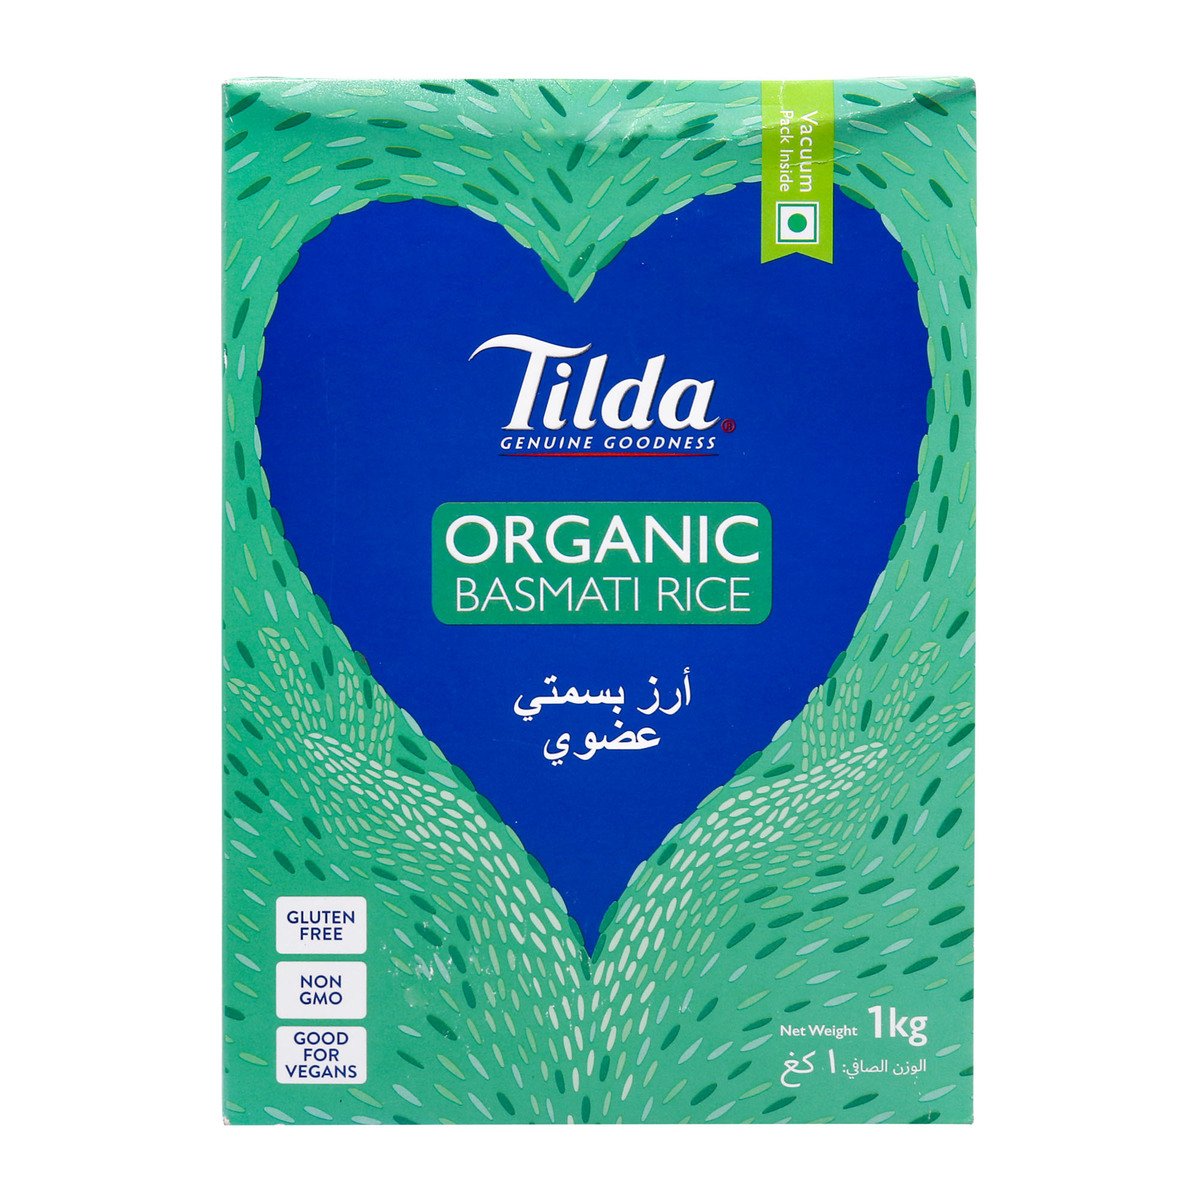 Tilda Organic Basmati Rice 1kg